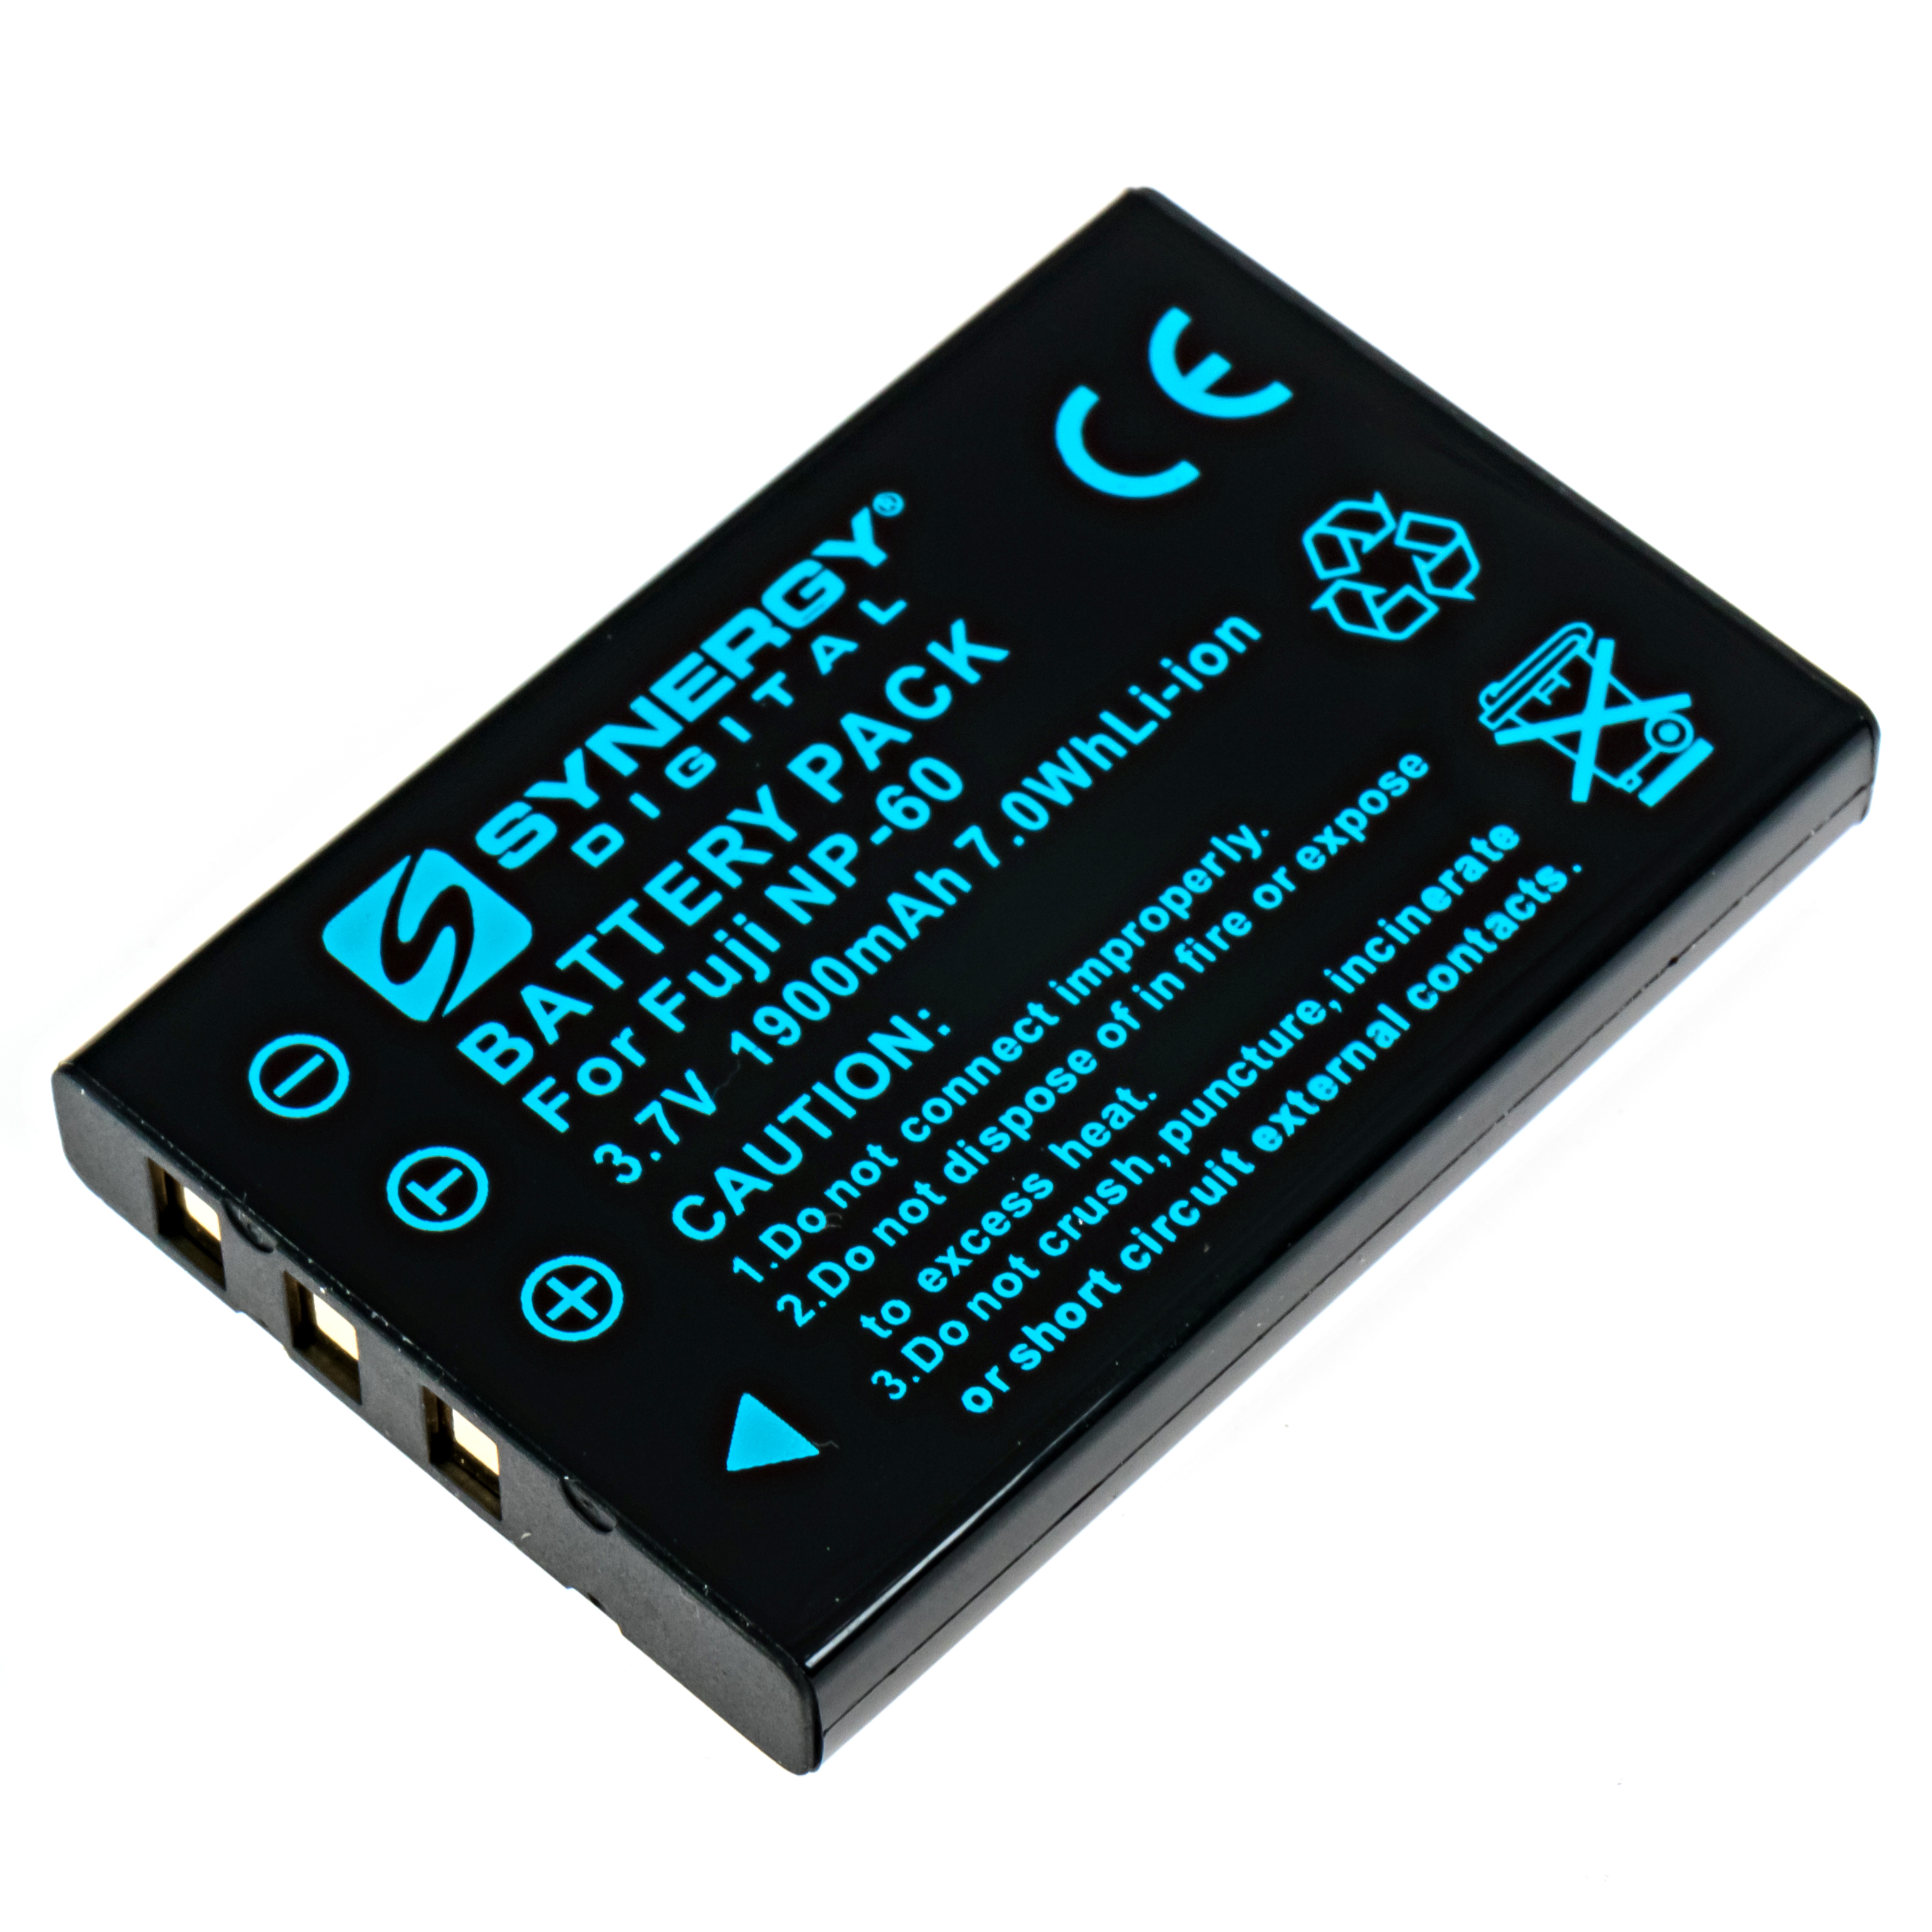 Synergy Digital Camera Battery, Compatible with Agfa DV-5000G, DV-5000Z, DV-5580Z, OPTIMA 1338mT, OPTIMA 2338mT Camera Battery (3.7, Li-ion, 1050mAh)